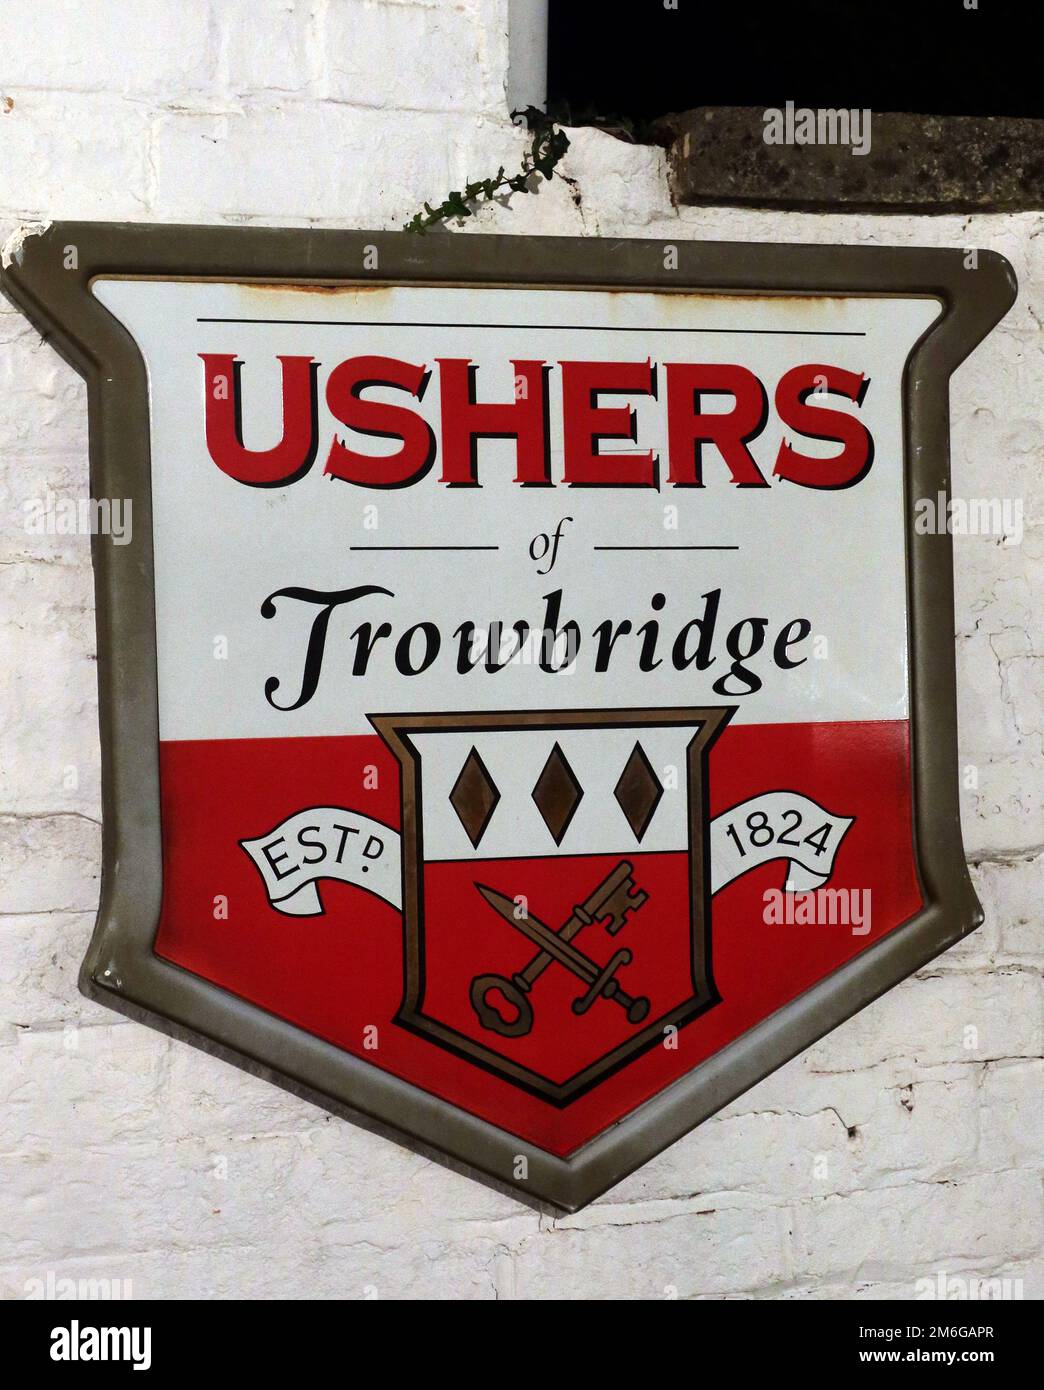 Ushers of Trowbridge brewers sign, Est 1824 Stock Photo